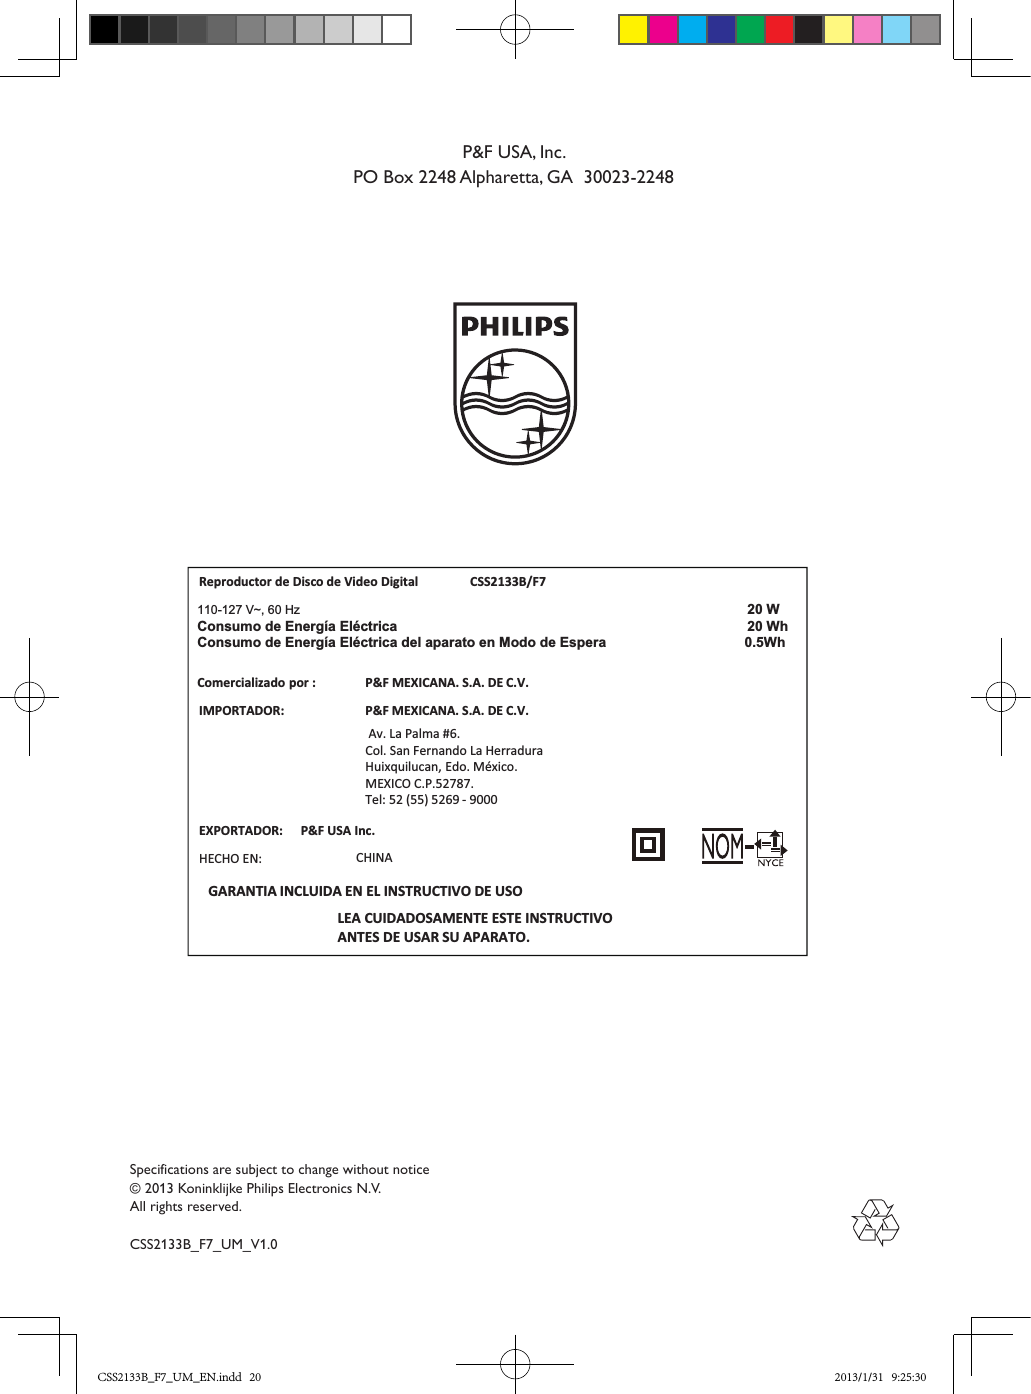 Specifications are subject to change without notice© 2013 Koninklijke Philips Electronics N.V.All rights reserved.CSS2133B_F7_UM_V1.0P&amp;F USA, Inc.PO Box 2248 Alpharetta, GA  30023-2248Reproductor de Disco de Video Digital CSS2133B/F7IMPORTADOR:P&amp;F MEXICANA. S.A. DE C.V. Av. La Palma #6.Col. San Fernando La HerraduraHuixquilucan, Edo. México.MEXICO C.P.52787. Tel: 52 (55) 5269 - 9000LEA CUIDADOSAMENTE ESTE INSTRUCTIVOANTES DE USAR SU APARATO.Comercializadopor :P&amp;F MEXICANA. S.A. DE C.V.EXPORTADOR: P&amp;F USA Inc.HECHO EN: CHINAGARANTIA INCLUIDA EN EL INSTRUCTIVO DE USO110-127 V~, 60 Hz 20 WhW 02acirtcélE aígrenE ed omusnoCConsumo de Energía Eléctrica del aparato en Modo de Espera   0.5WhCSS2133B_F7_UM_EN.indd   20 2013/1/31   9:25:30